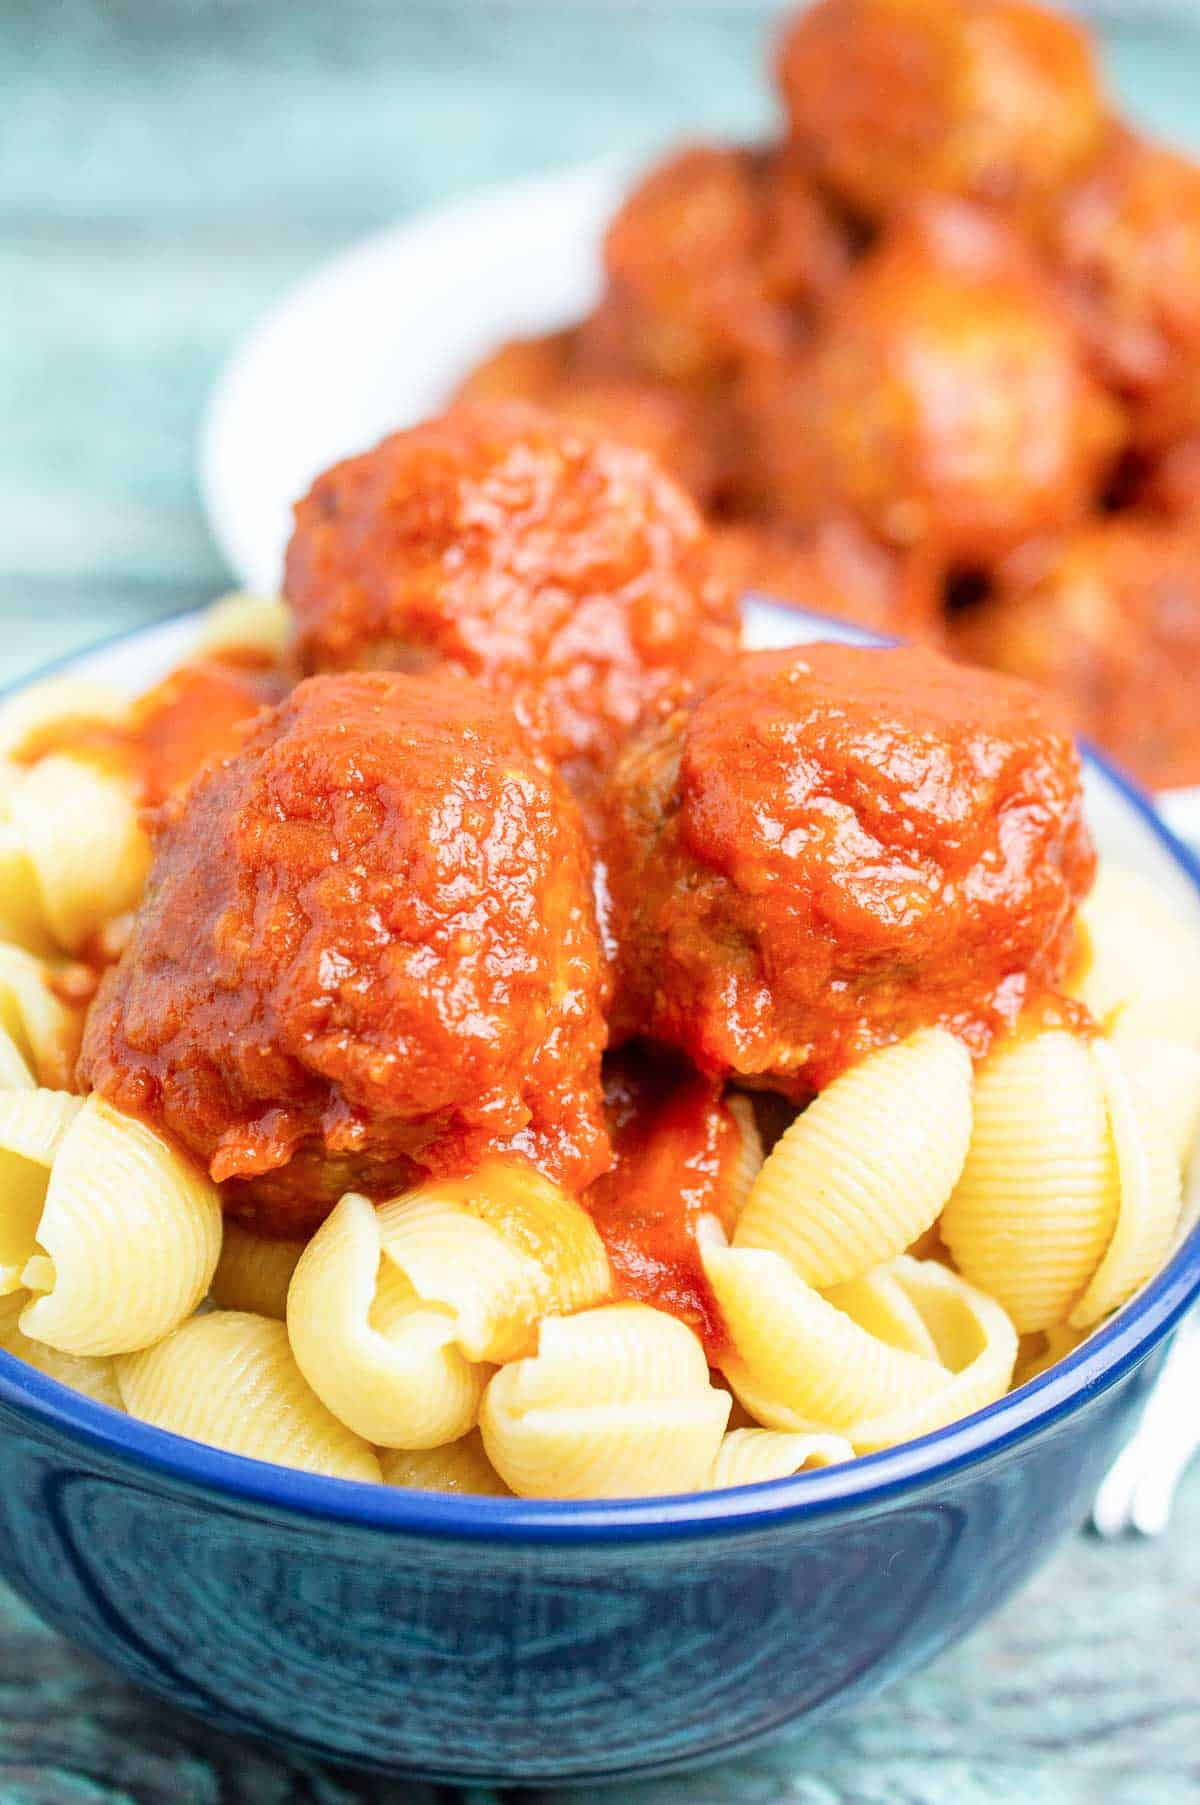 Vegan meatballs and sauce over pasta